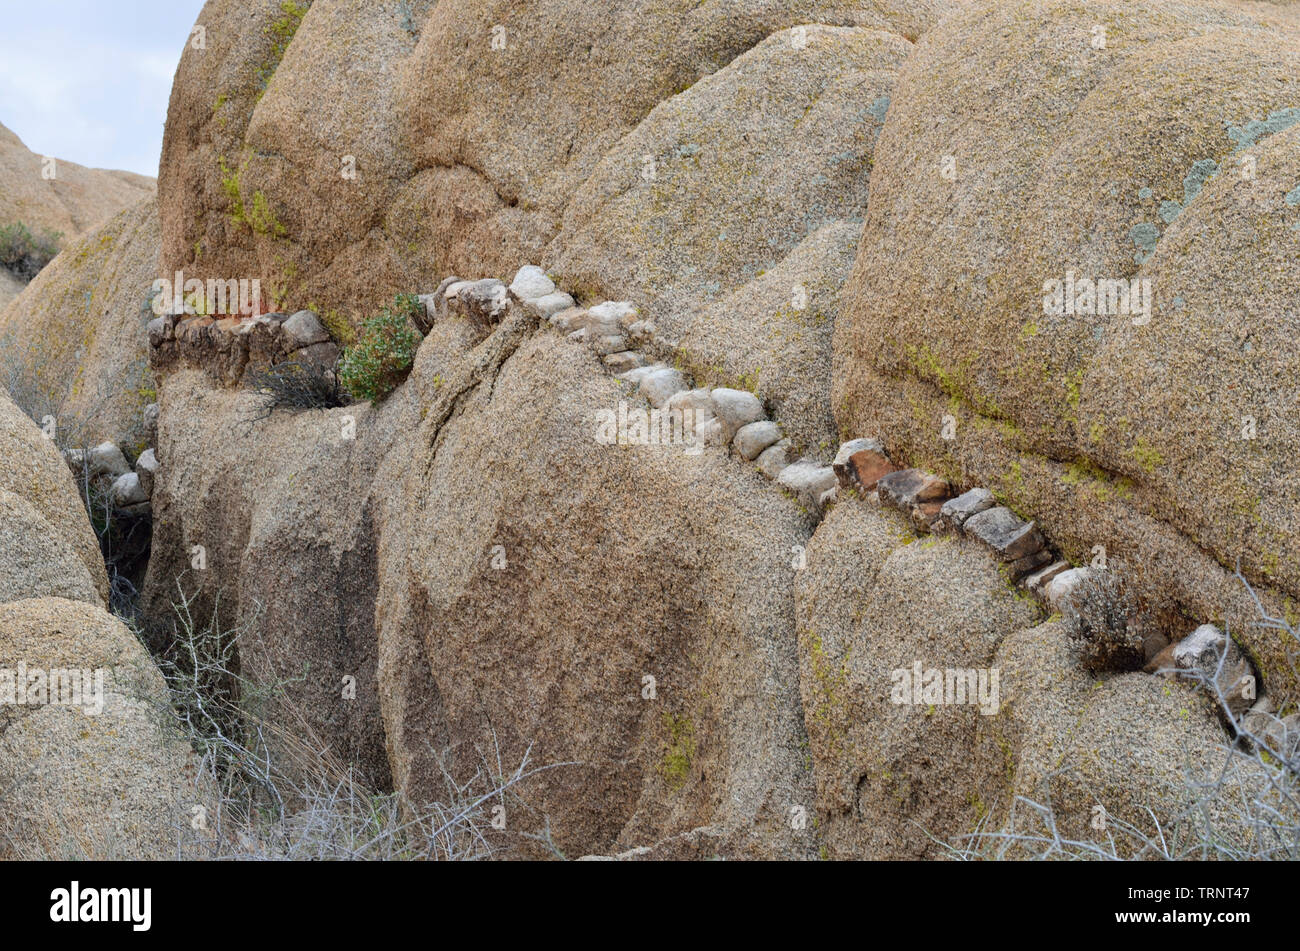 Rock monzogranite avec aplitiques (veine rock ignées intrusives), Jumbo Rocks, Joshua Tree National Park, CA, USA 180312 7348 Banque D'Images